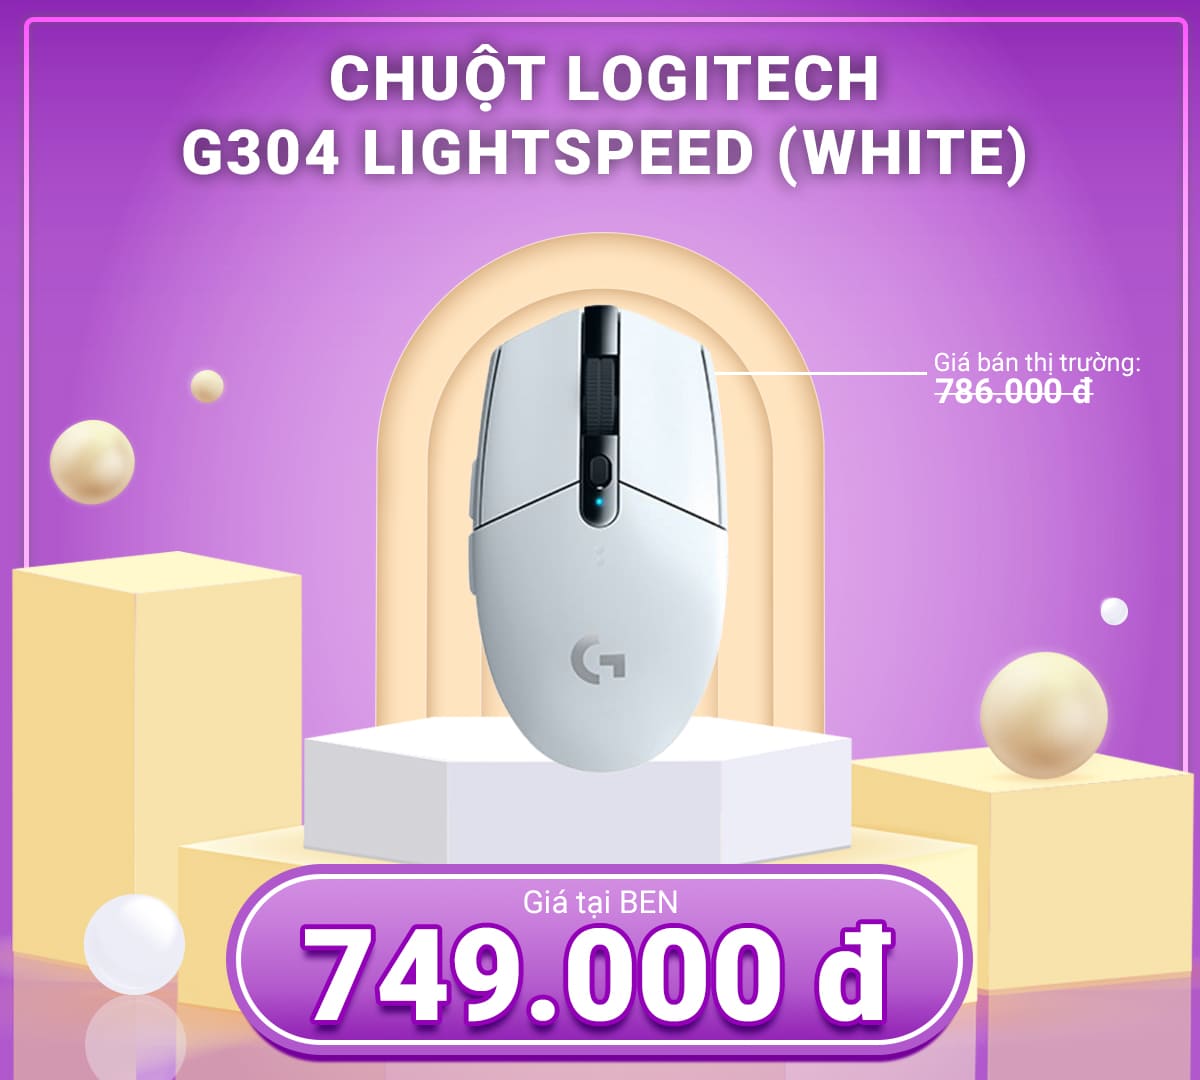 Chuot Logitech G304 LIGHTSPEED white 1